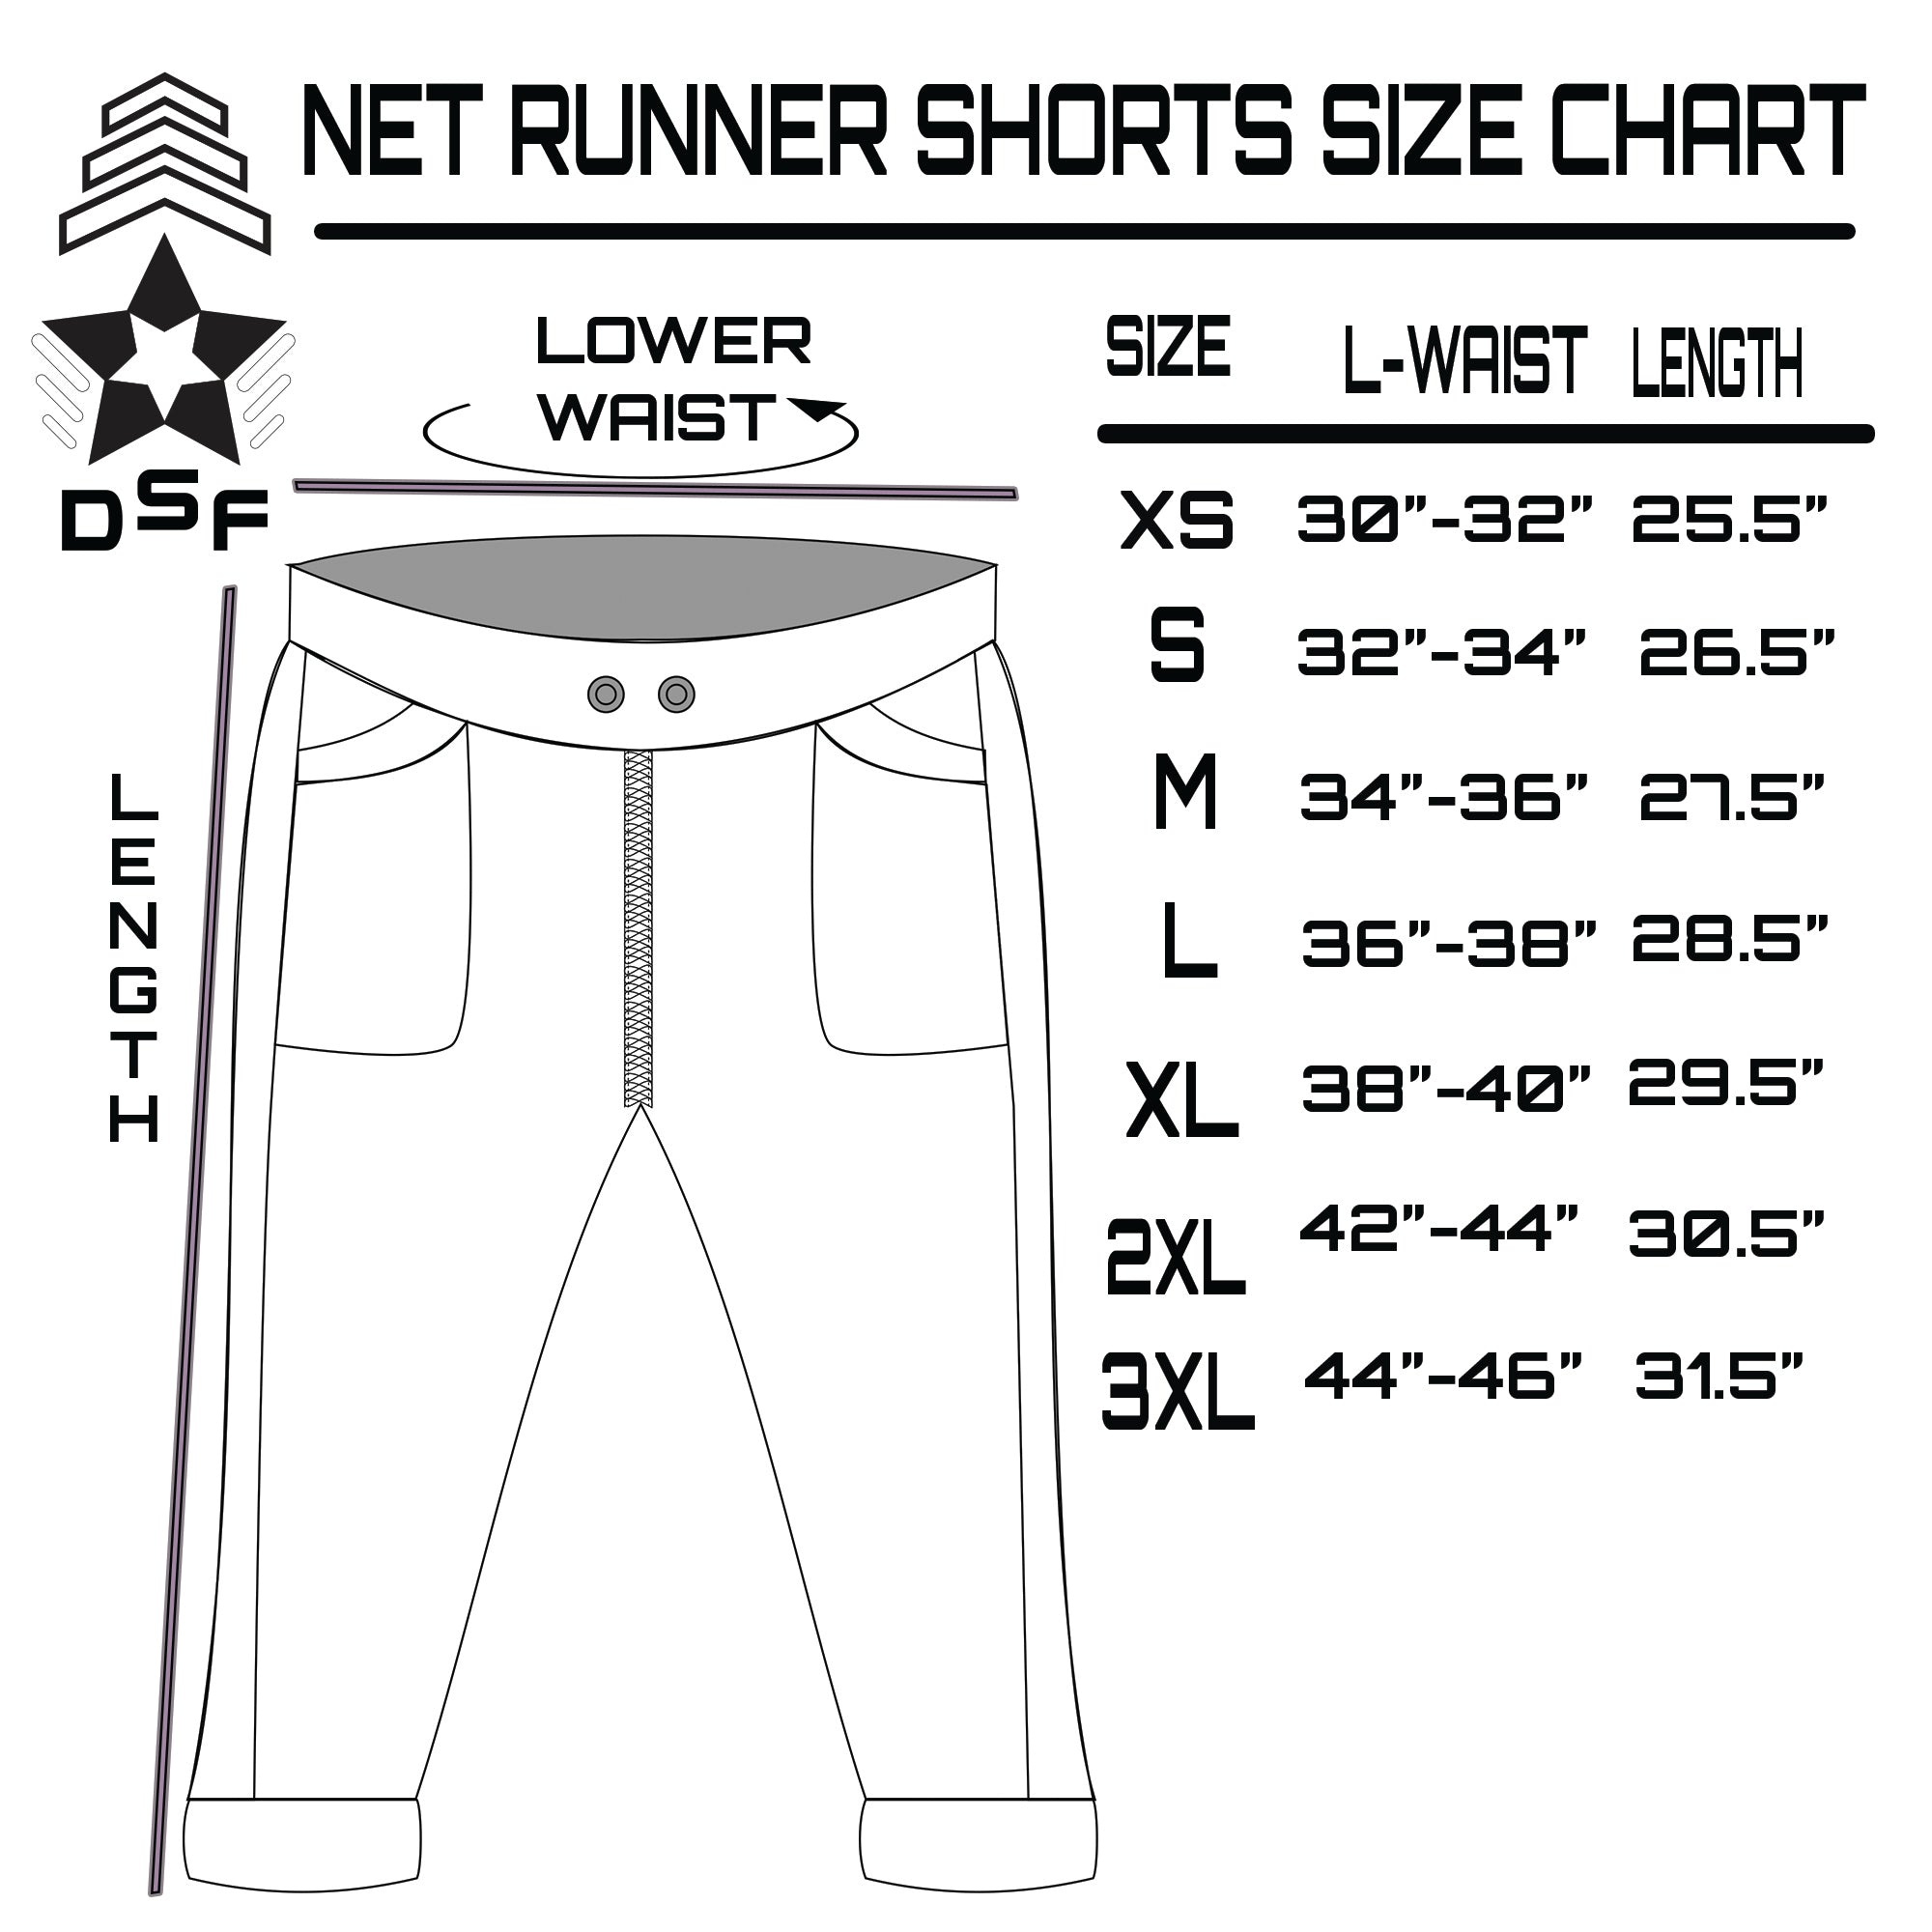 VectorNet Runner Shorts - Pawstar dsfusion Shorts bottoms, cyber, festival, rave, sale, ship-15, ship-30day